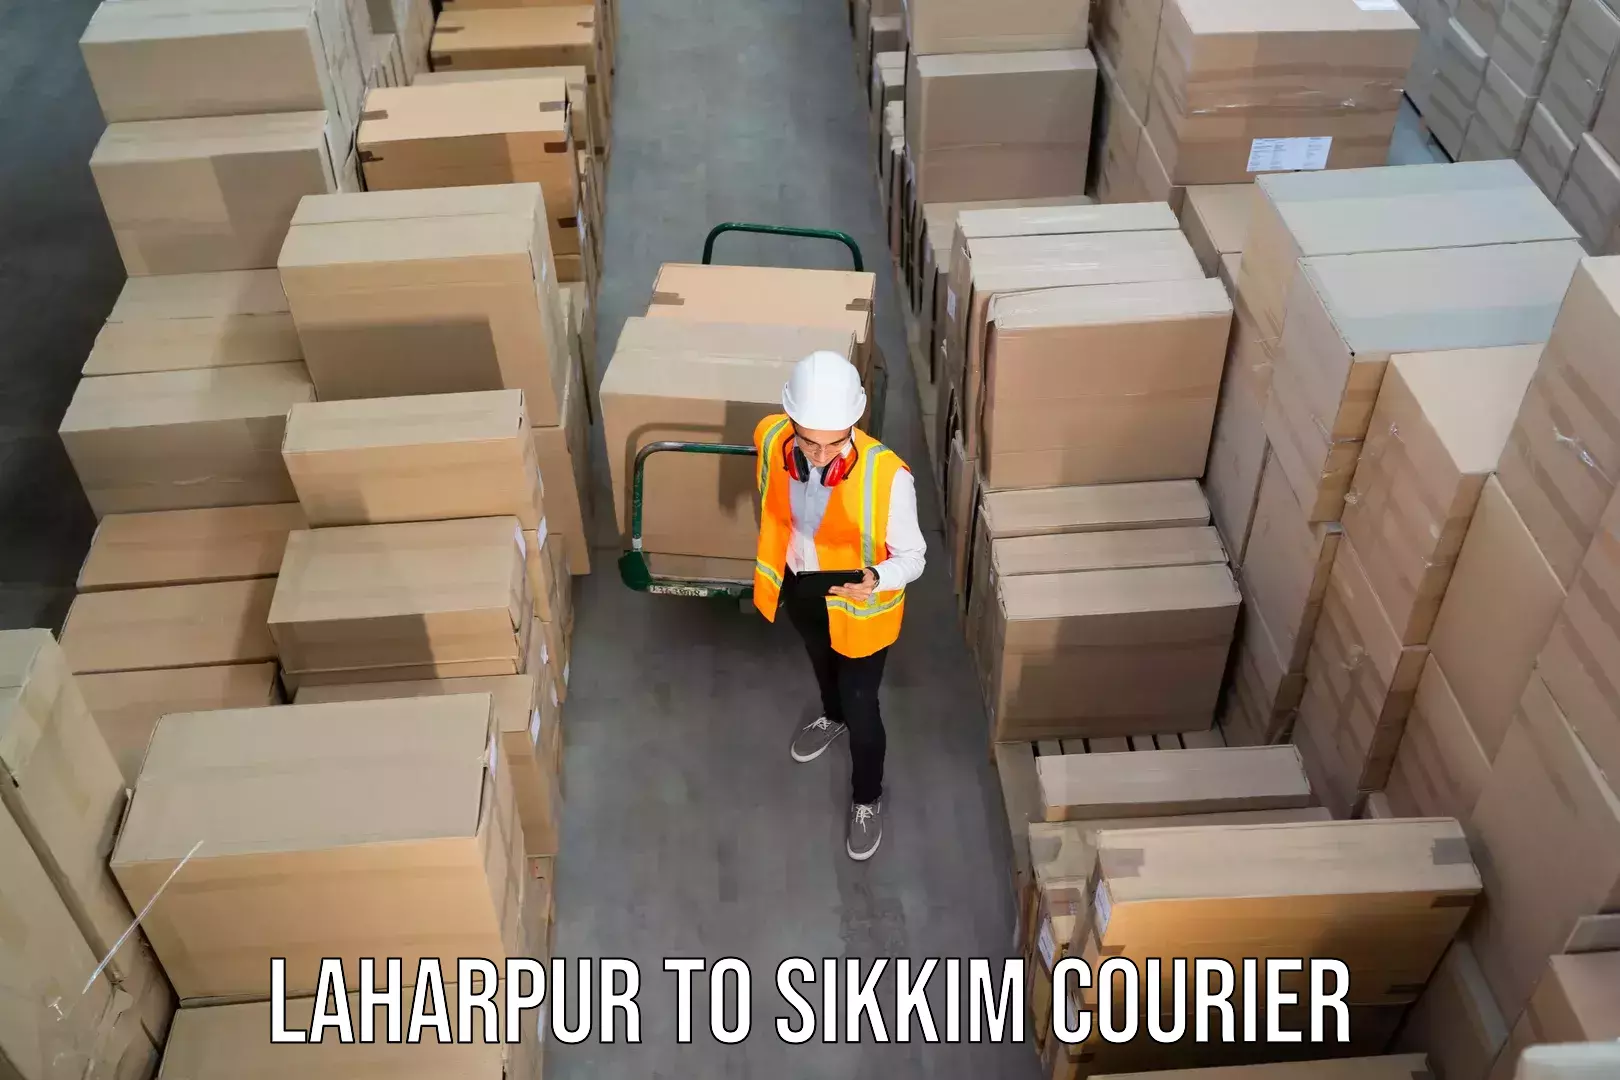 Courier service innovation Laharpur to Namchi